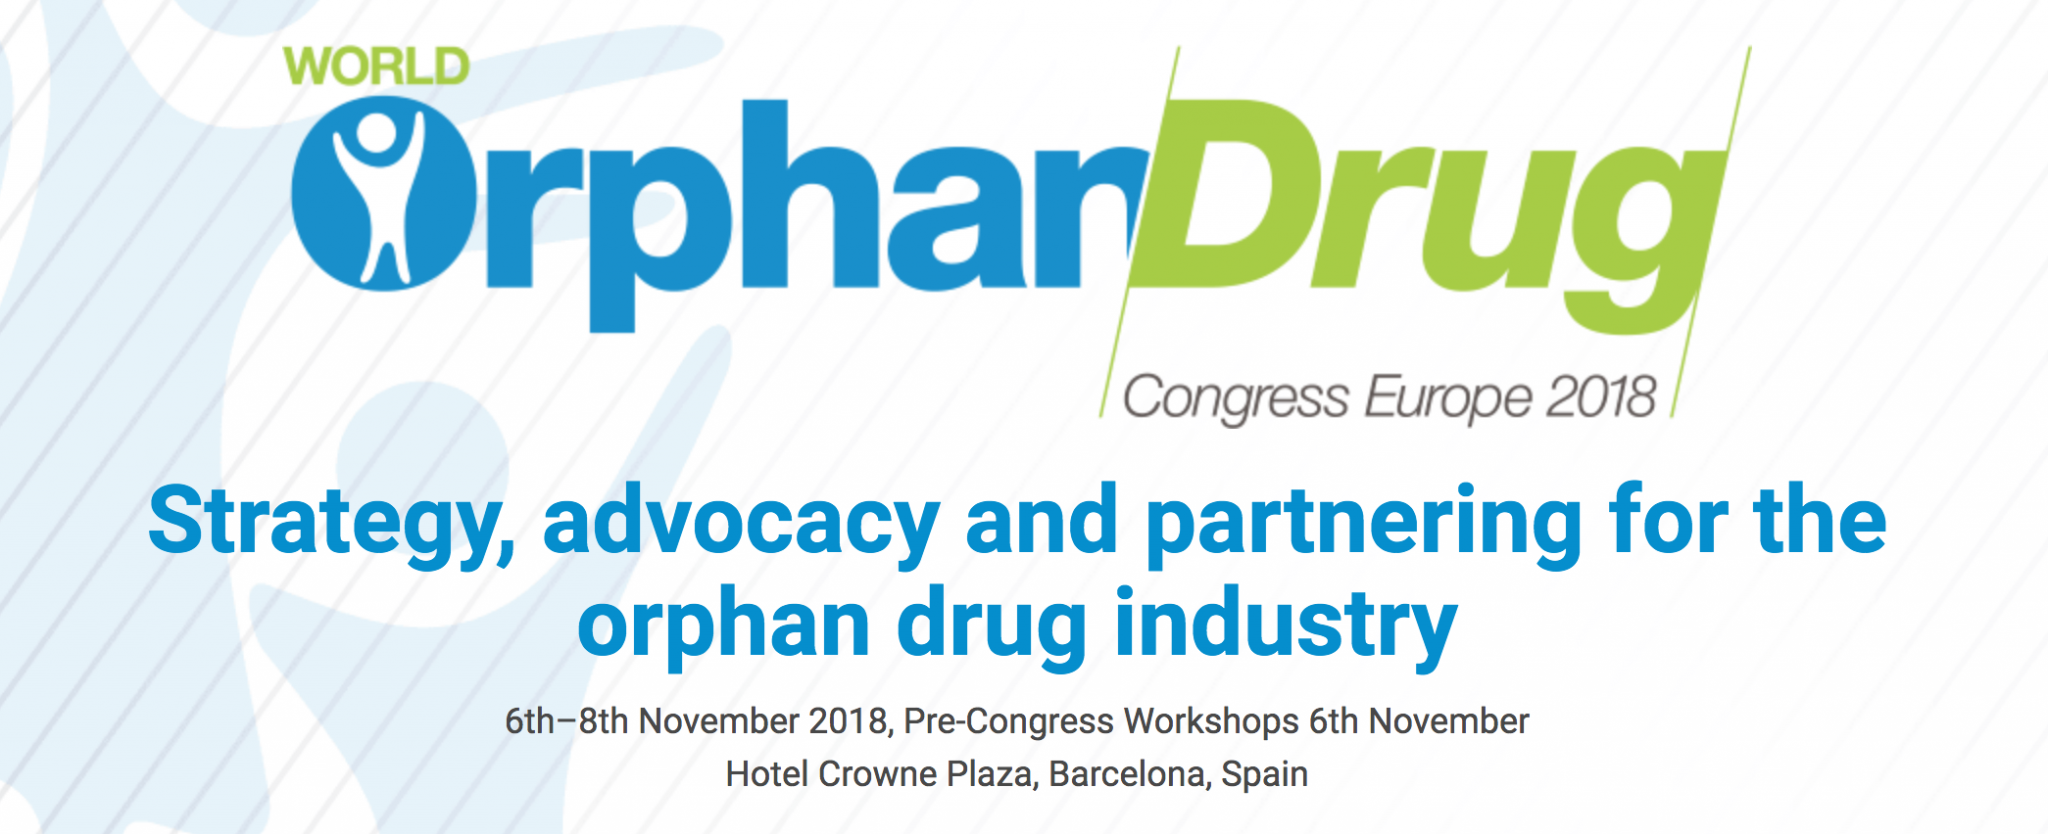 World Orphan Drug Congress 2018